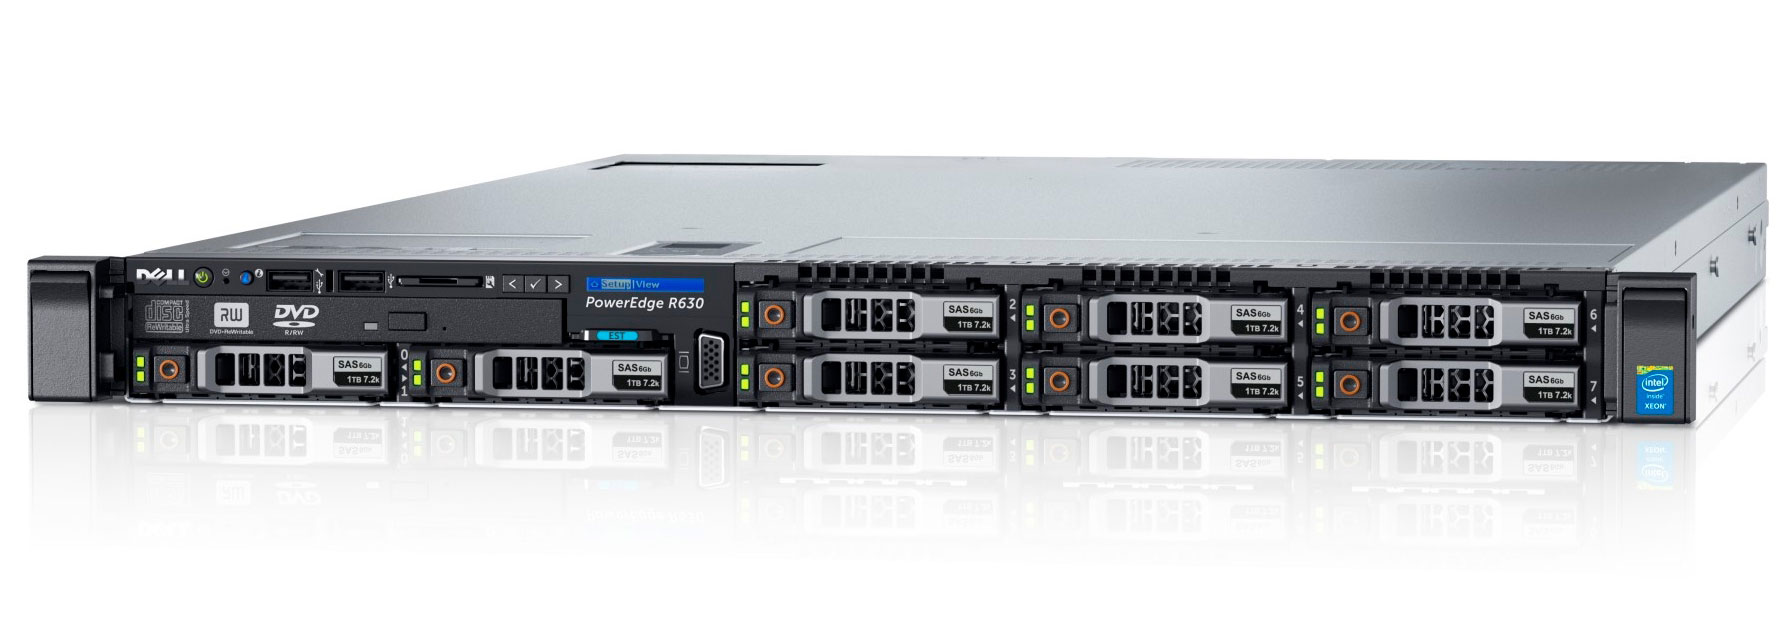 Подробное фото Сервер DELL PowerEdge R630 2x Xeon E5-2667v4 192Gb 2133P DDR4 8x noHDD 2.5", SAS RAID Perc H730, 1024Mb, DVD, 2*PSU